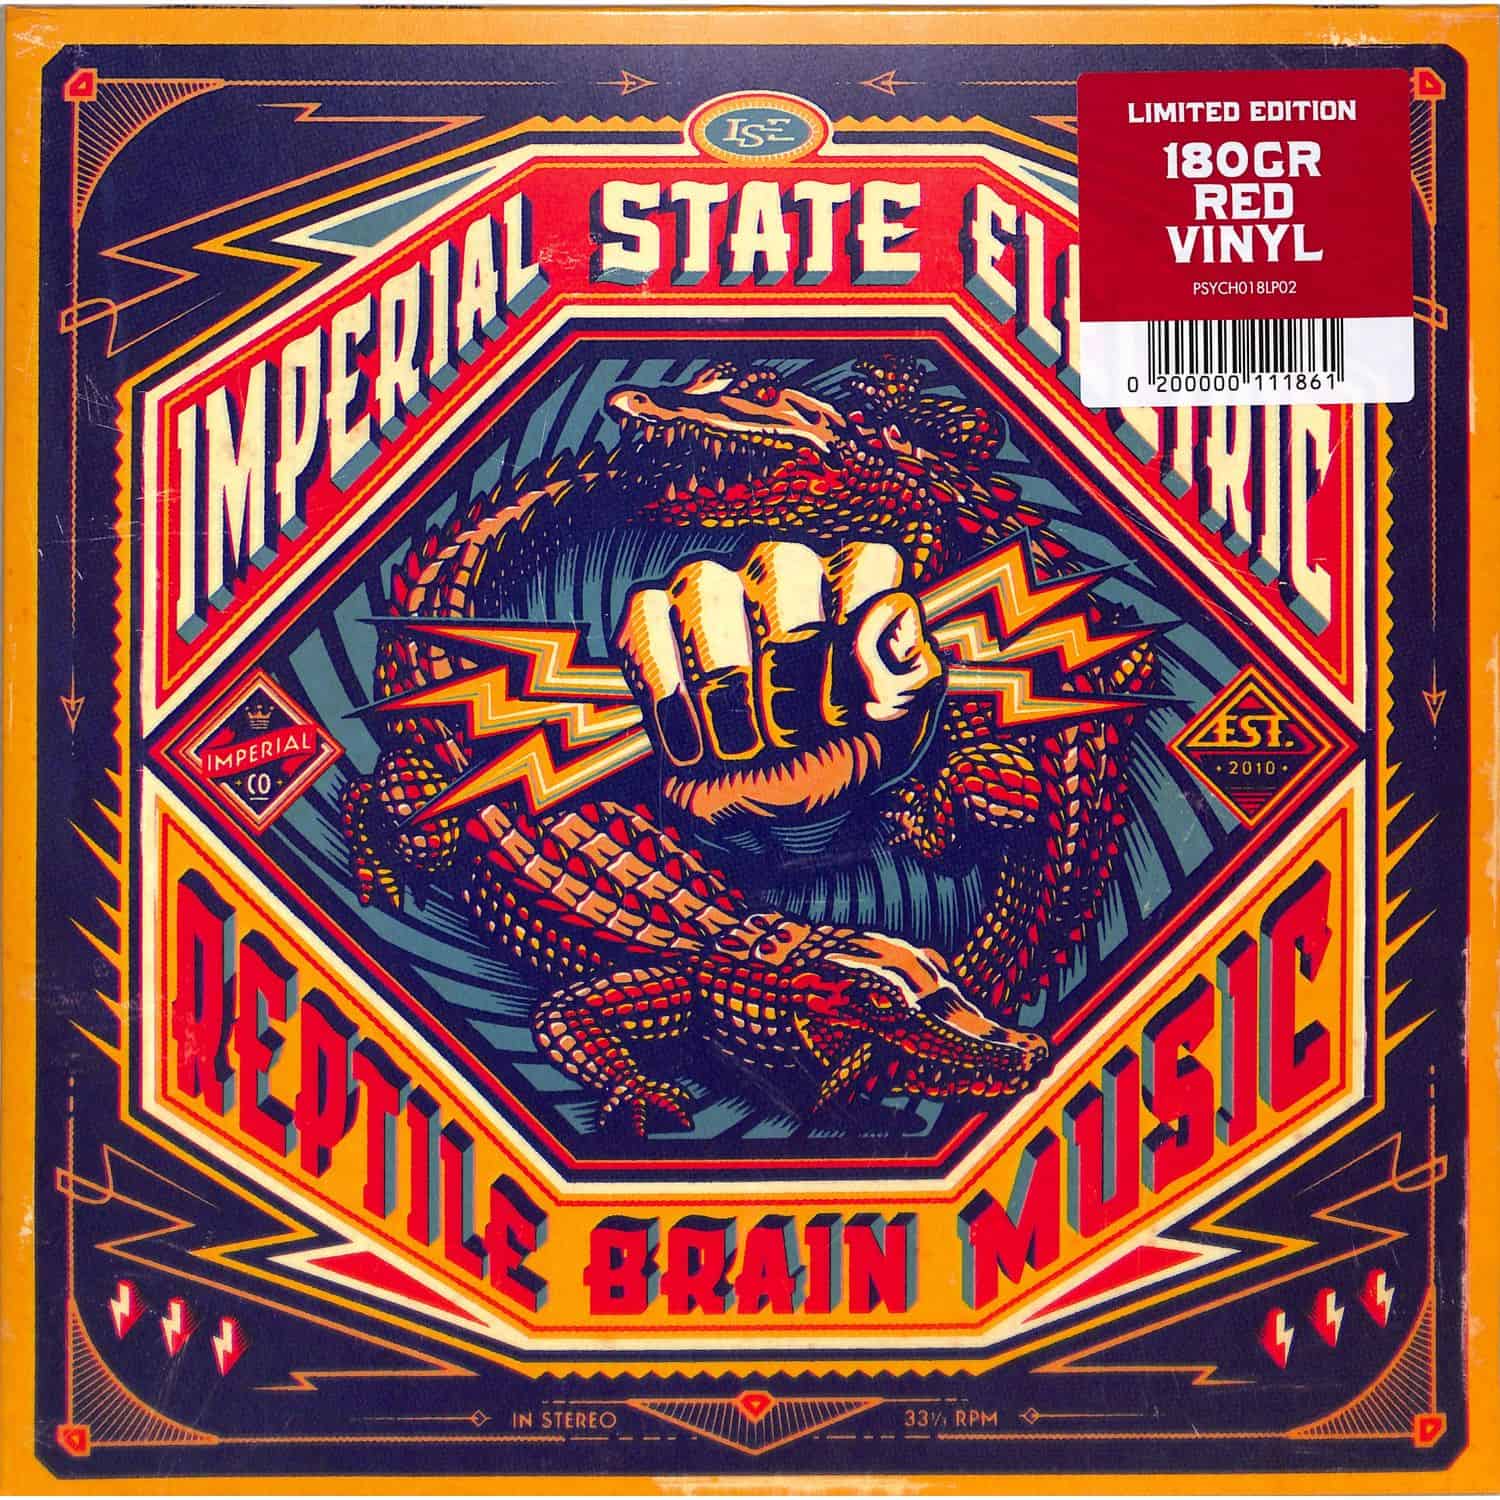 Imperial State Electric - REPTILE BRAIN MUSIC 